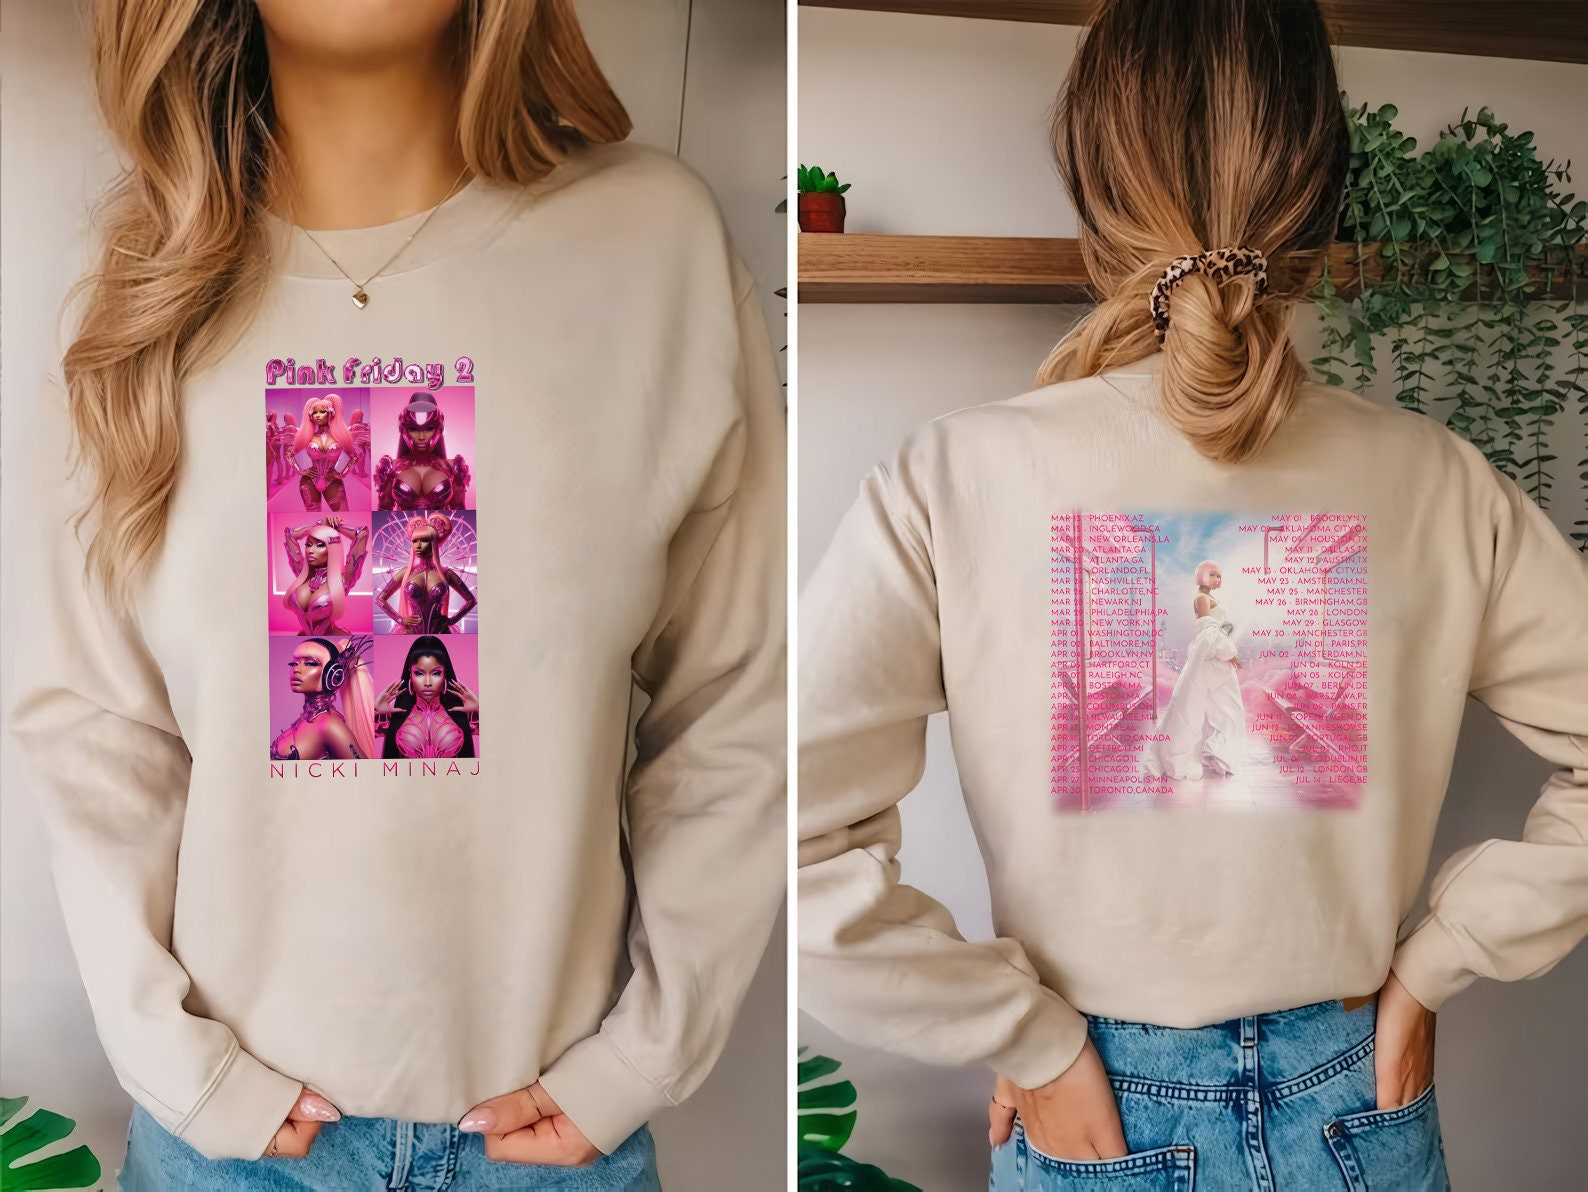 Nicki Minaj Pink Friday 2 Tour Shirt Gag City T-Shirt Nicki Minaj World Tour Shirt